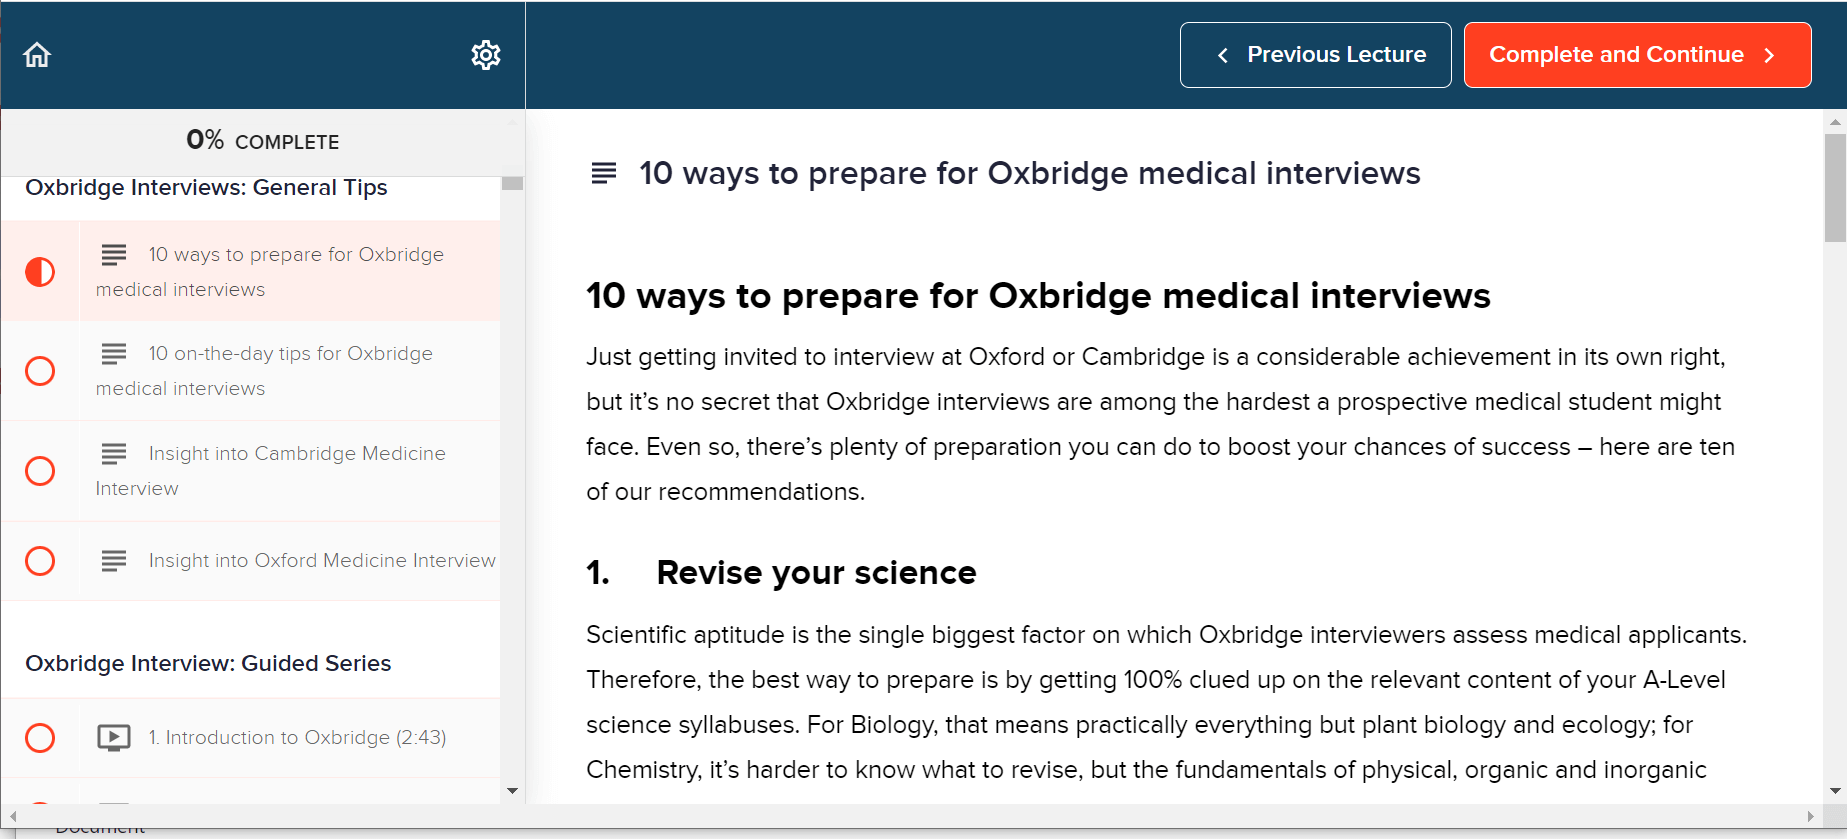 10 ways to prepare for Oxbridge medical interviews